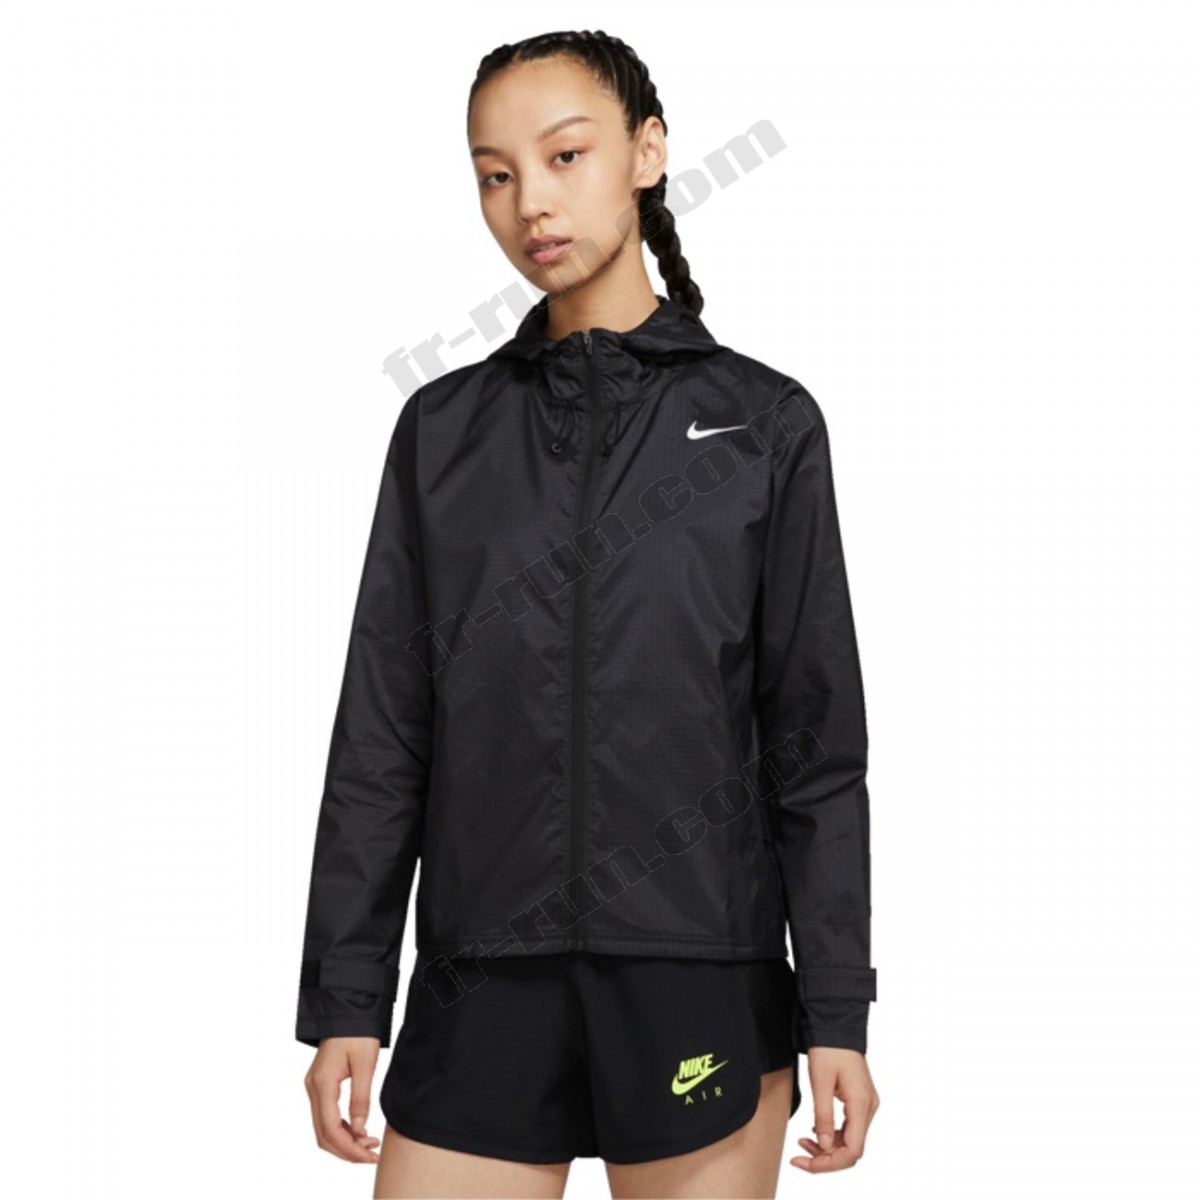 Nike/VESTE running femme NIKE ESSENTIAL √ Nouveau style √ Soldes - -3